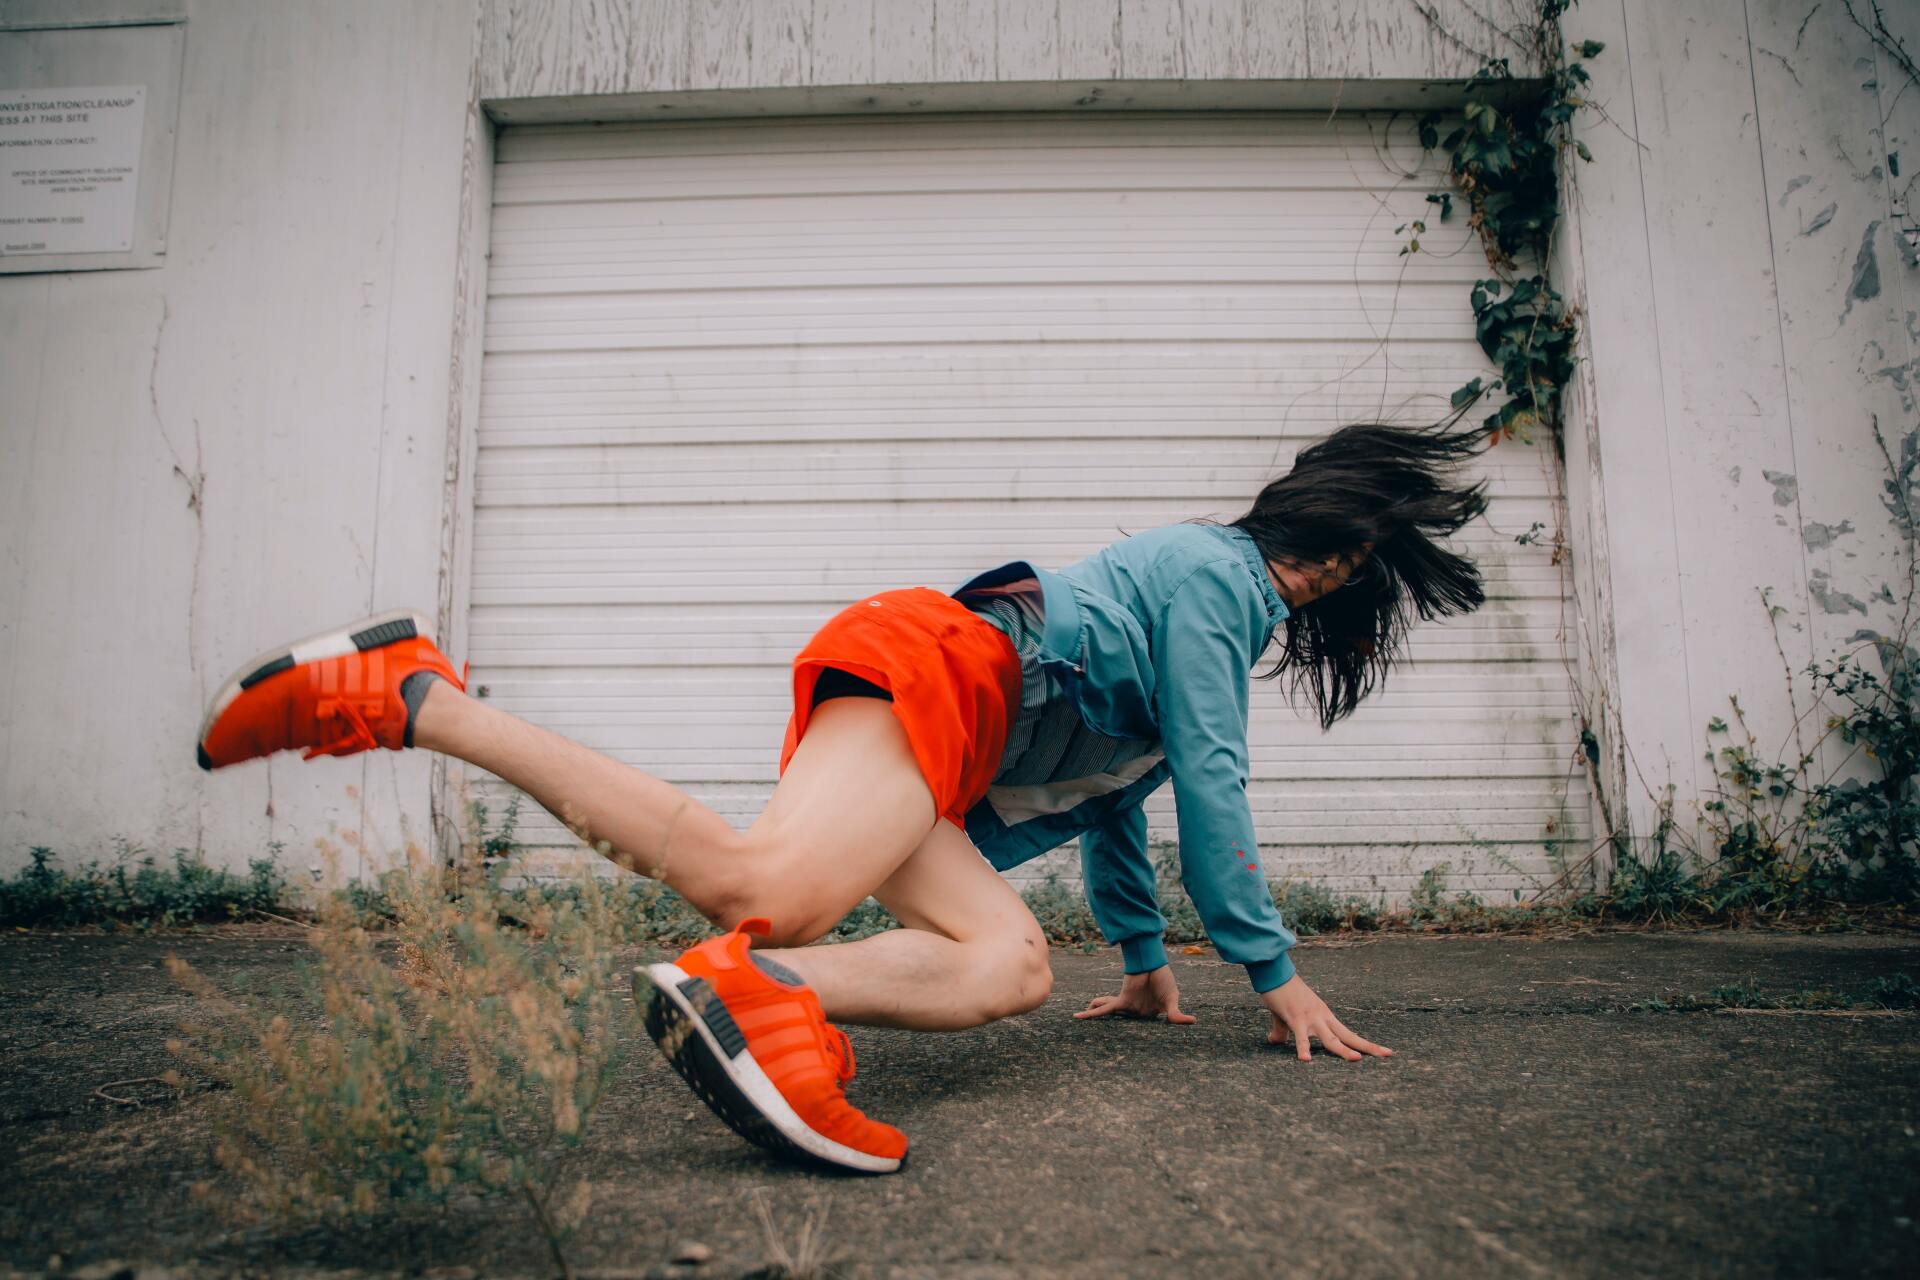 Woman break dancing wearing orange shoes and shorts